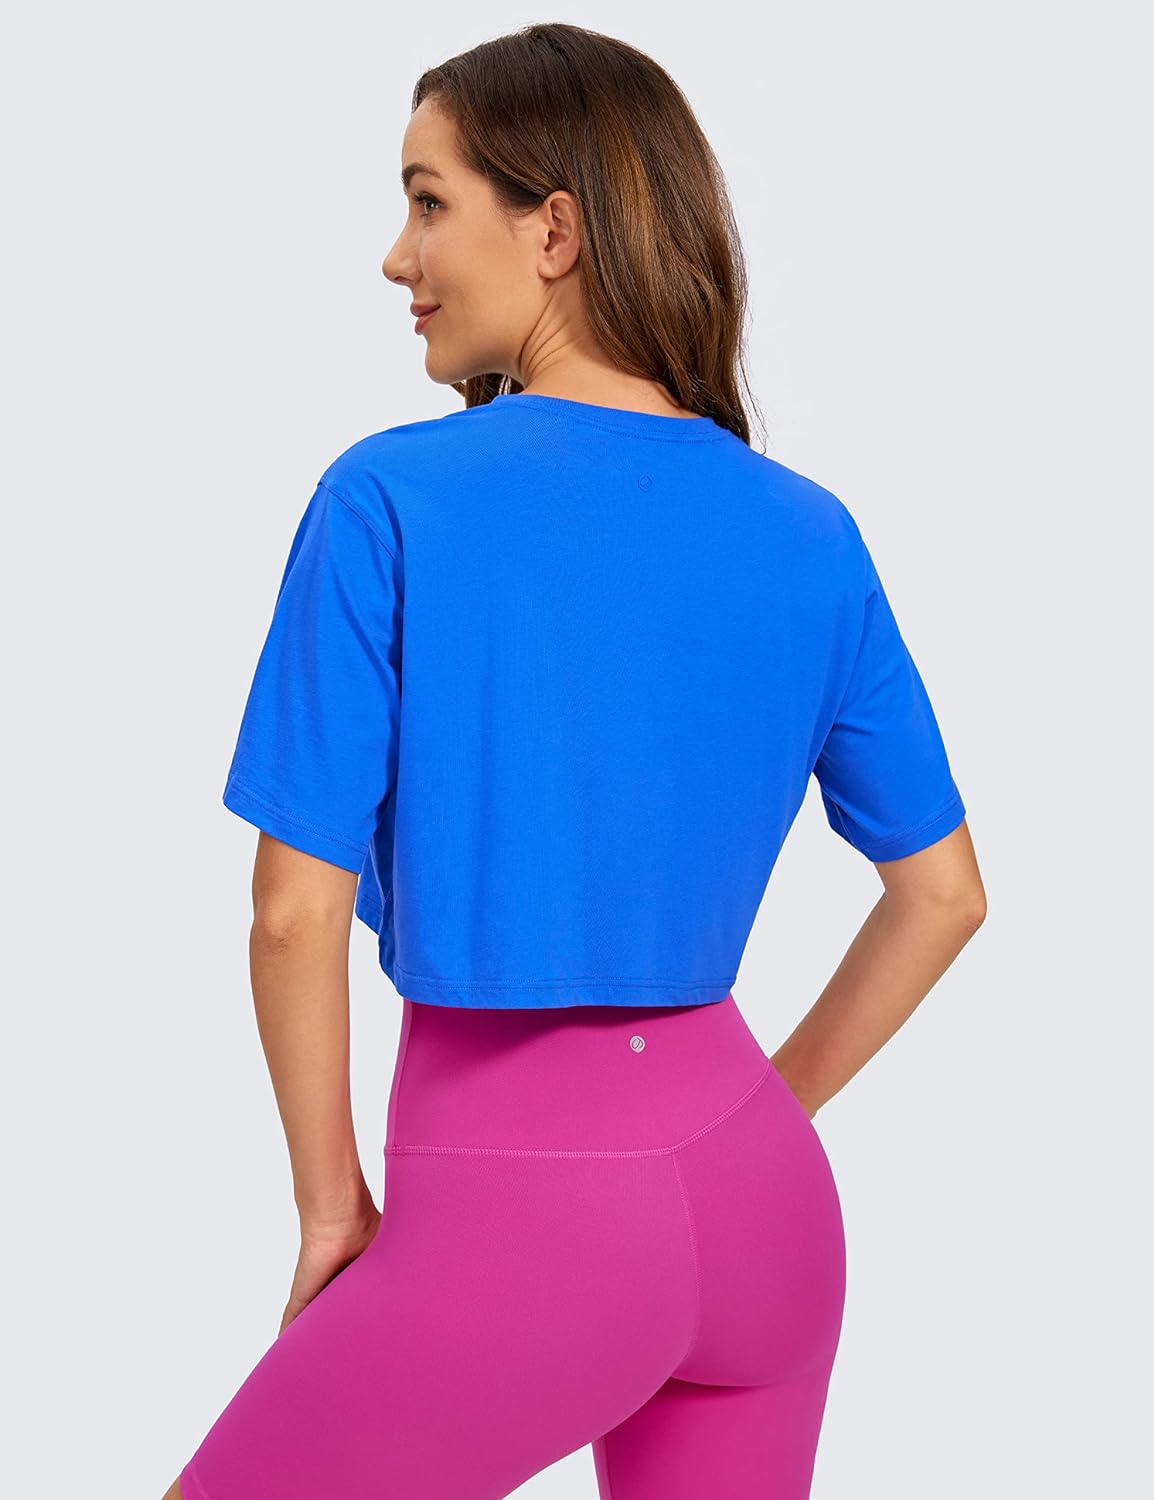 CRZ YOGA Women's Pima Cotton Workout Crop Tops Short Sleeve Yoga Shirts Casual Athletic Running T-Shirts